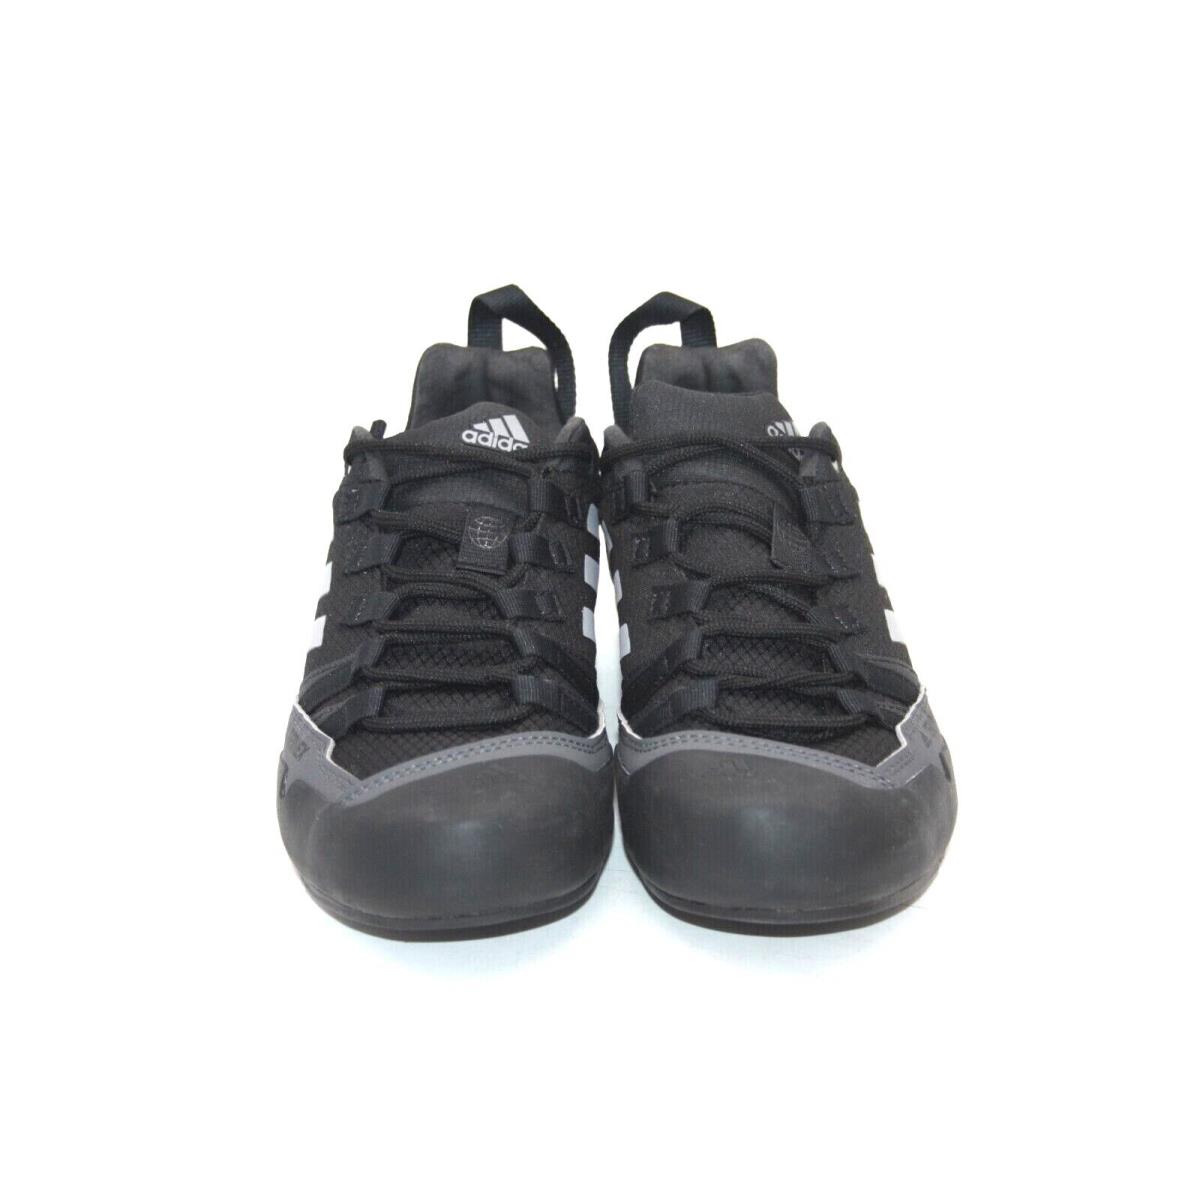 Adidas shoes Terrex Swift Solo - BLACK/BLACK/GREY 1